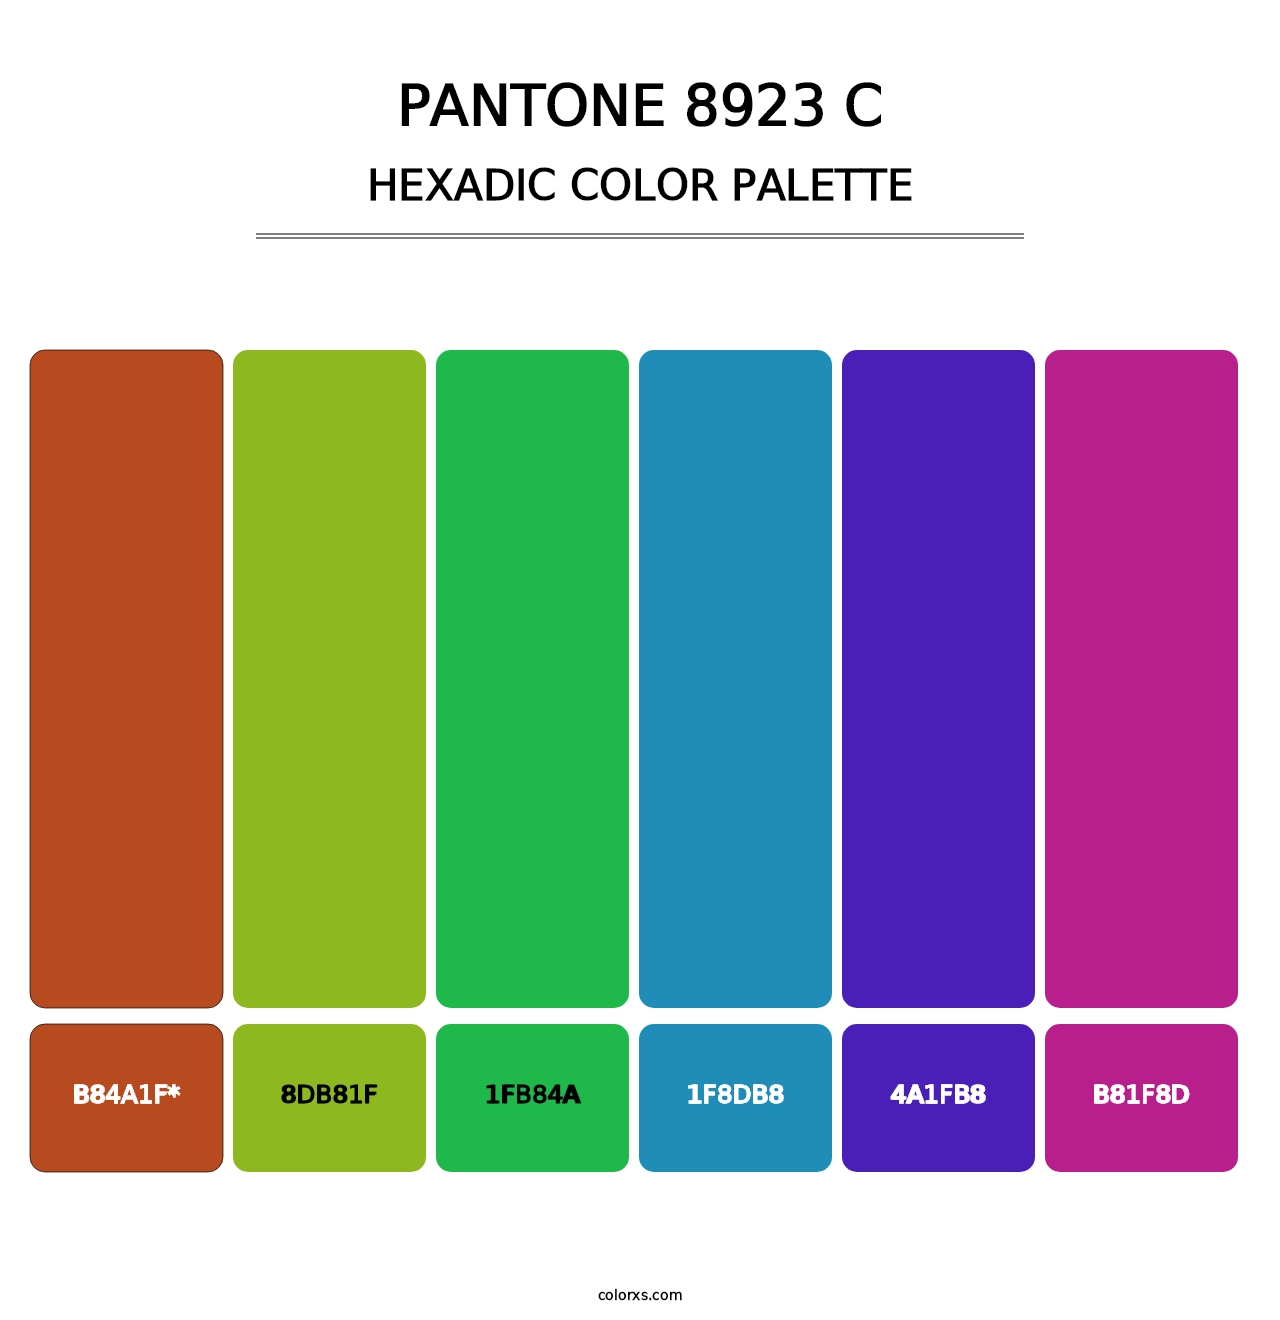 PANTONE 8923 C - Hexadic Color Palette